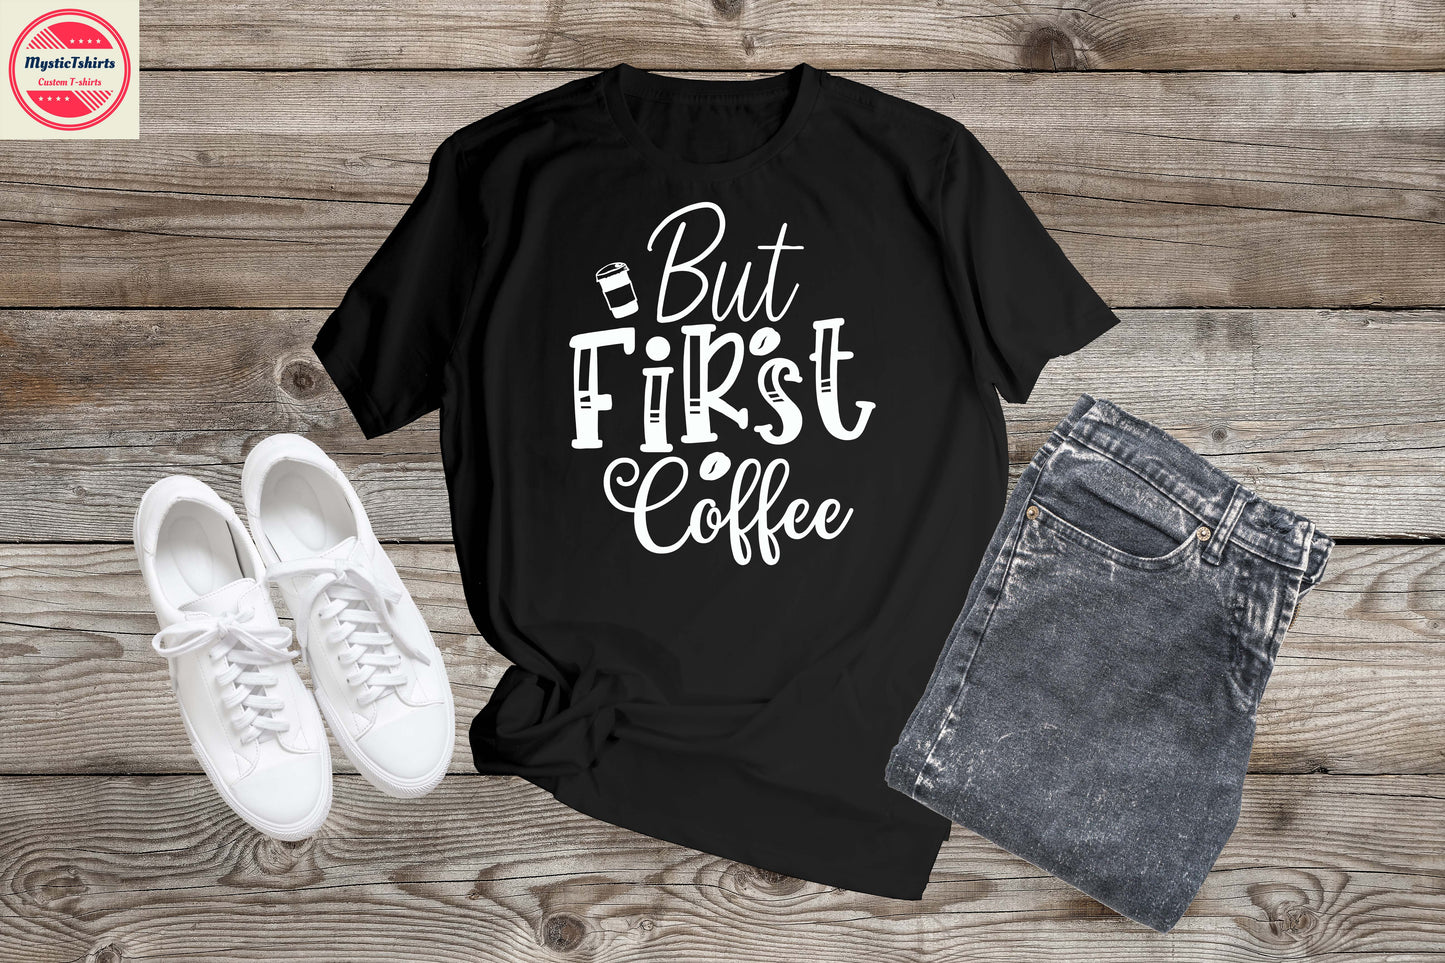 045. BUT FIRST COFFEE, Custom Made Shirt, Personalized T-Shirt, Custom Text, Make Your Own Shirt, Custom Tee